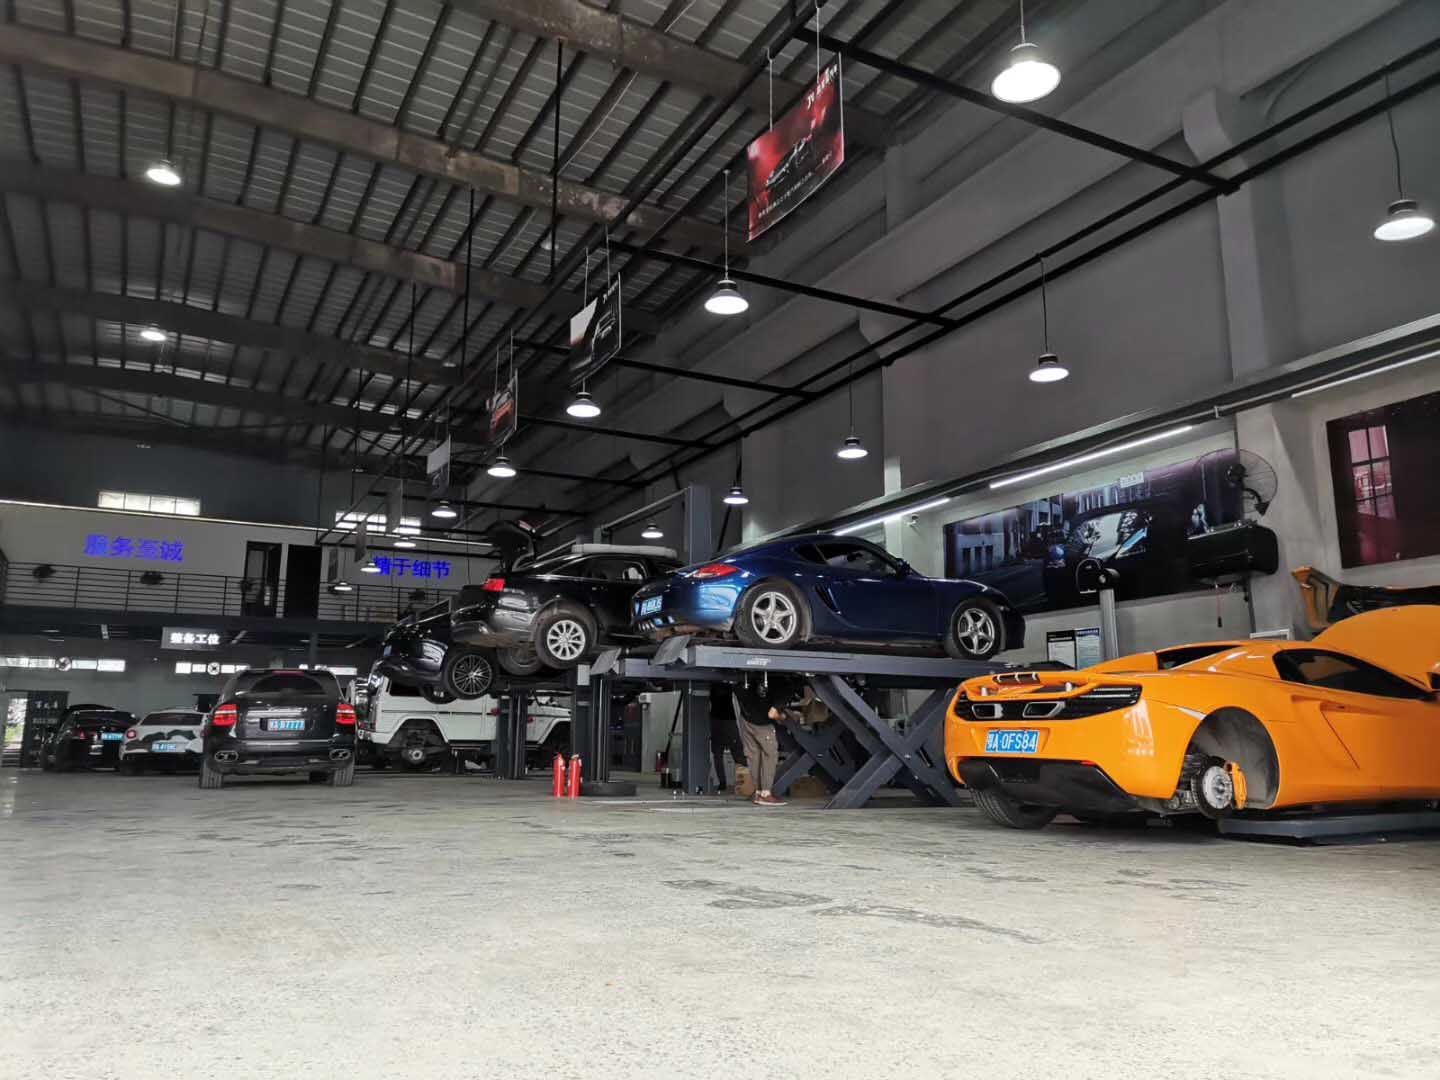 4 Essential Garage Equipment Must-Haves for Car Restoration Beginners